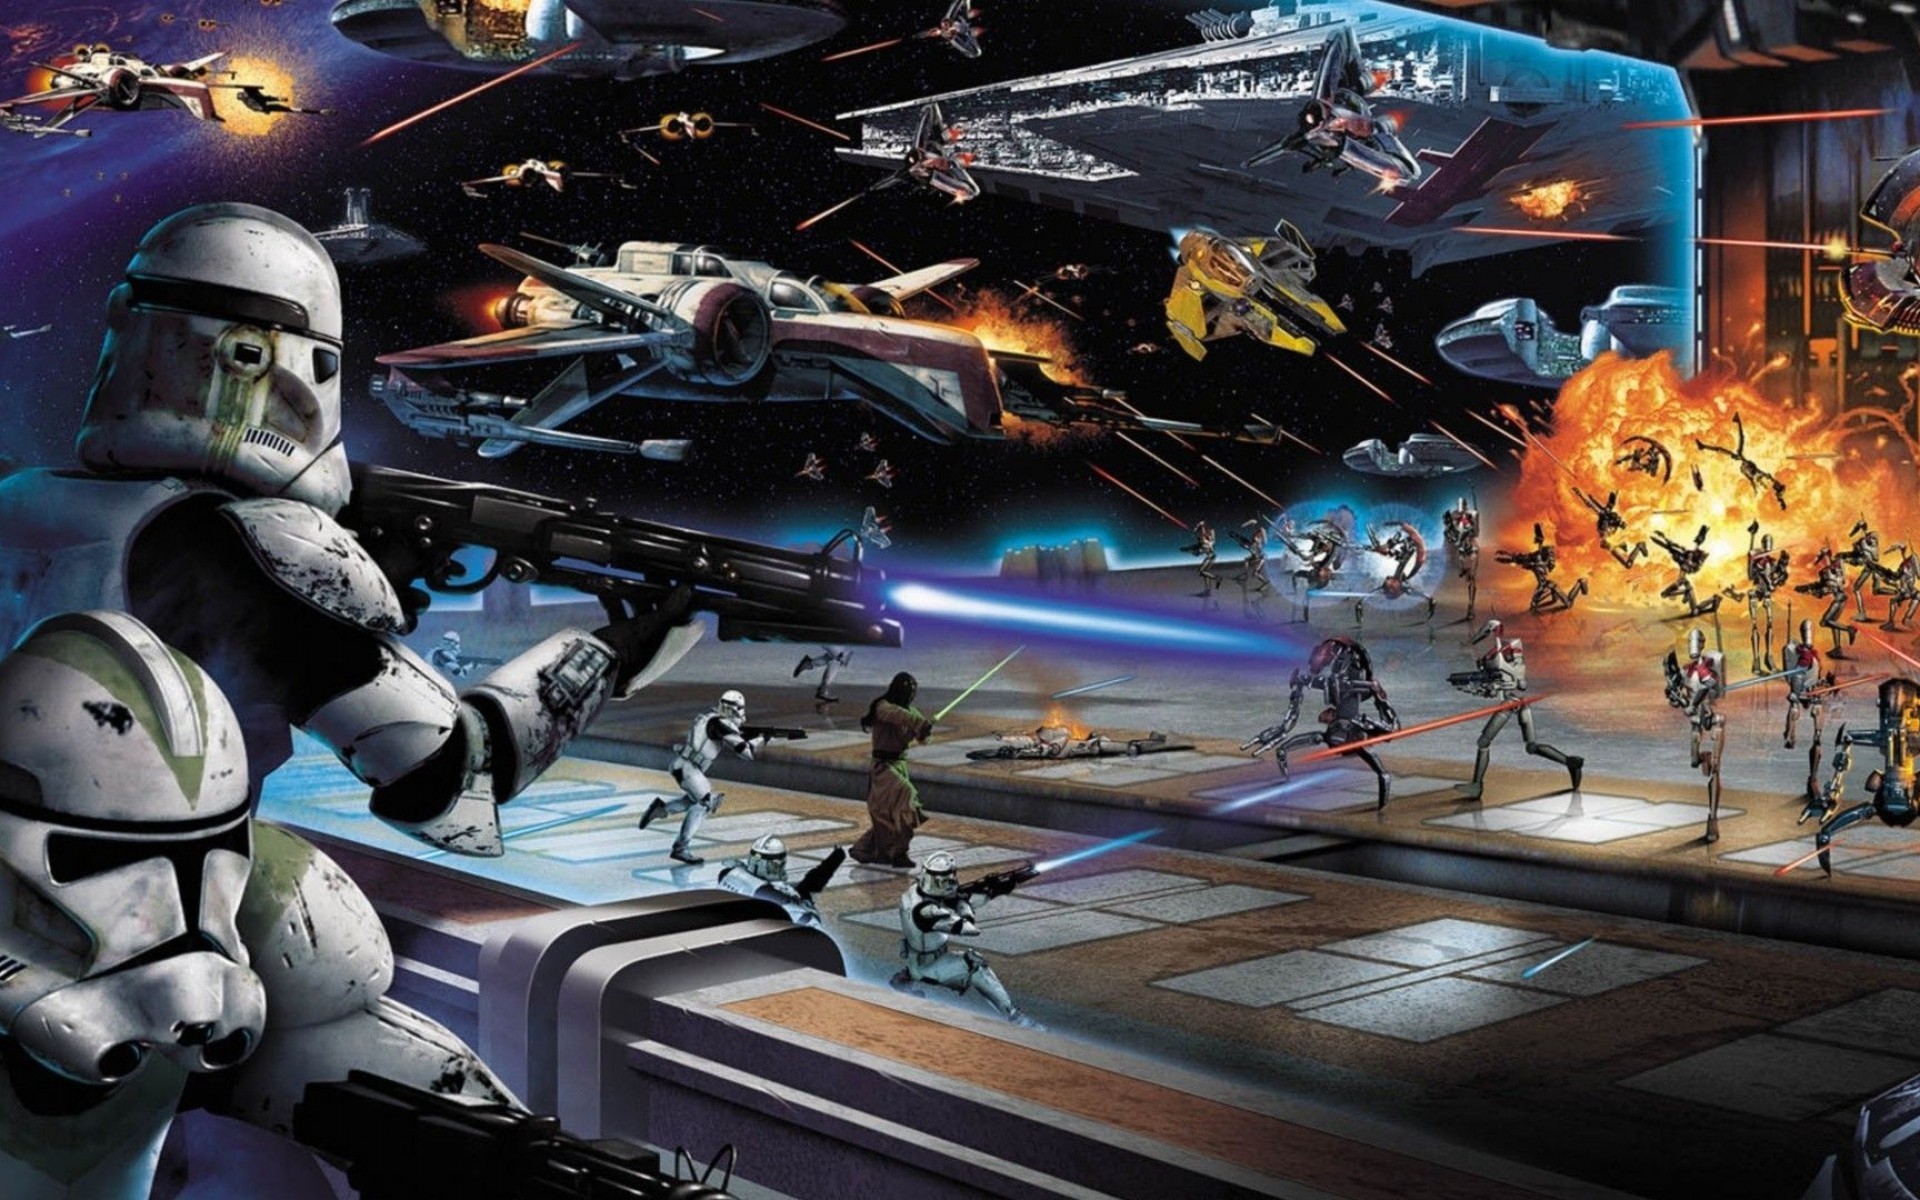 Star Wars Space Battle Wallpaper Image